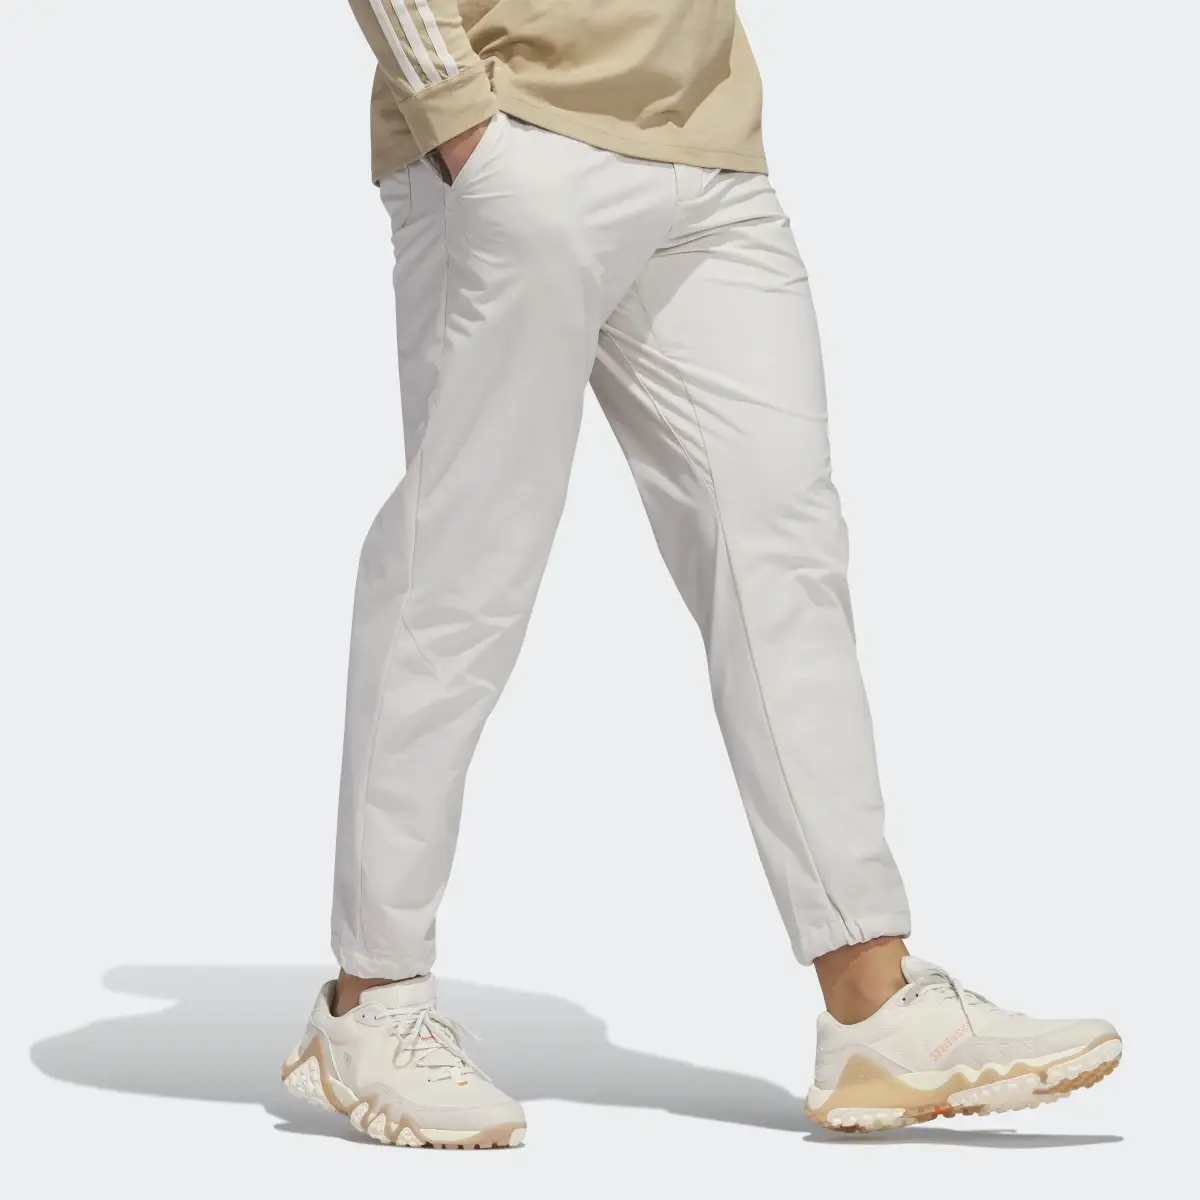 Adidas Adicross Golf Pants. 3